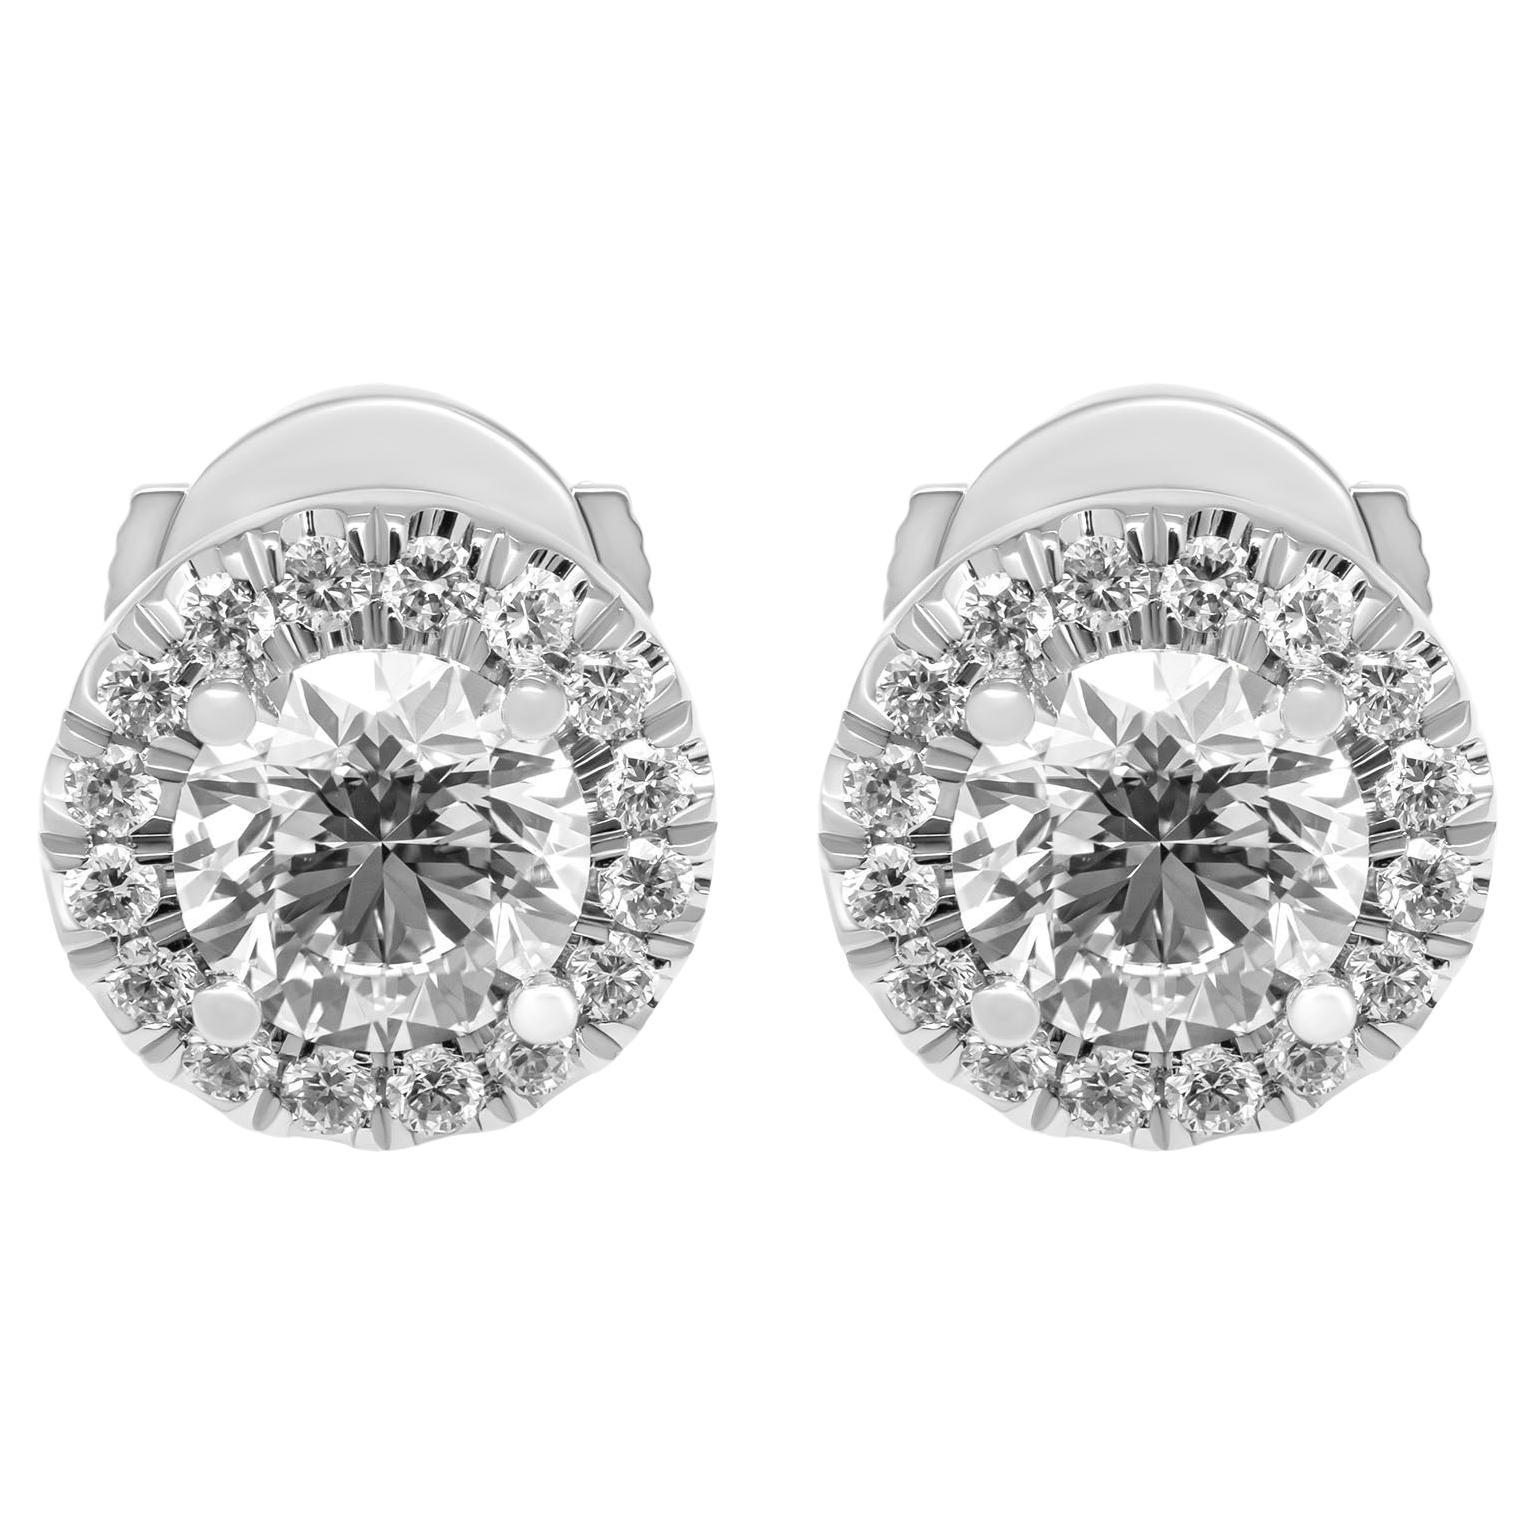 GIA Certified Classic halo studs 
In Platinum 
Stones:
0.61ct G VVS2 Round diamond GIA#2437372520
0.61ct G VVS2 Round diamond GIA#6422568170 
Total Carat Weight of pave on halo: 0.24ct